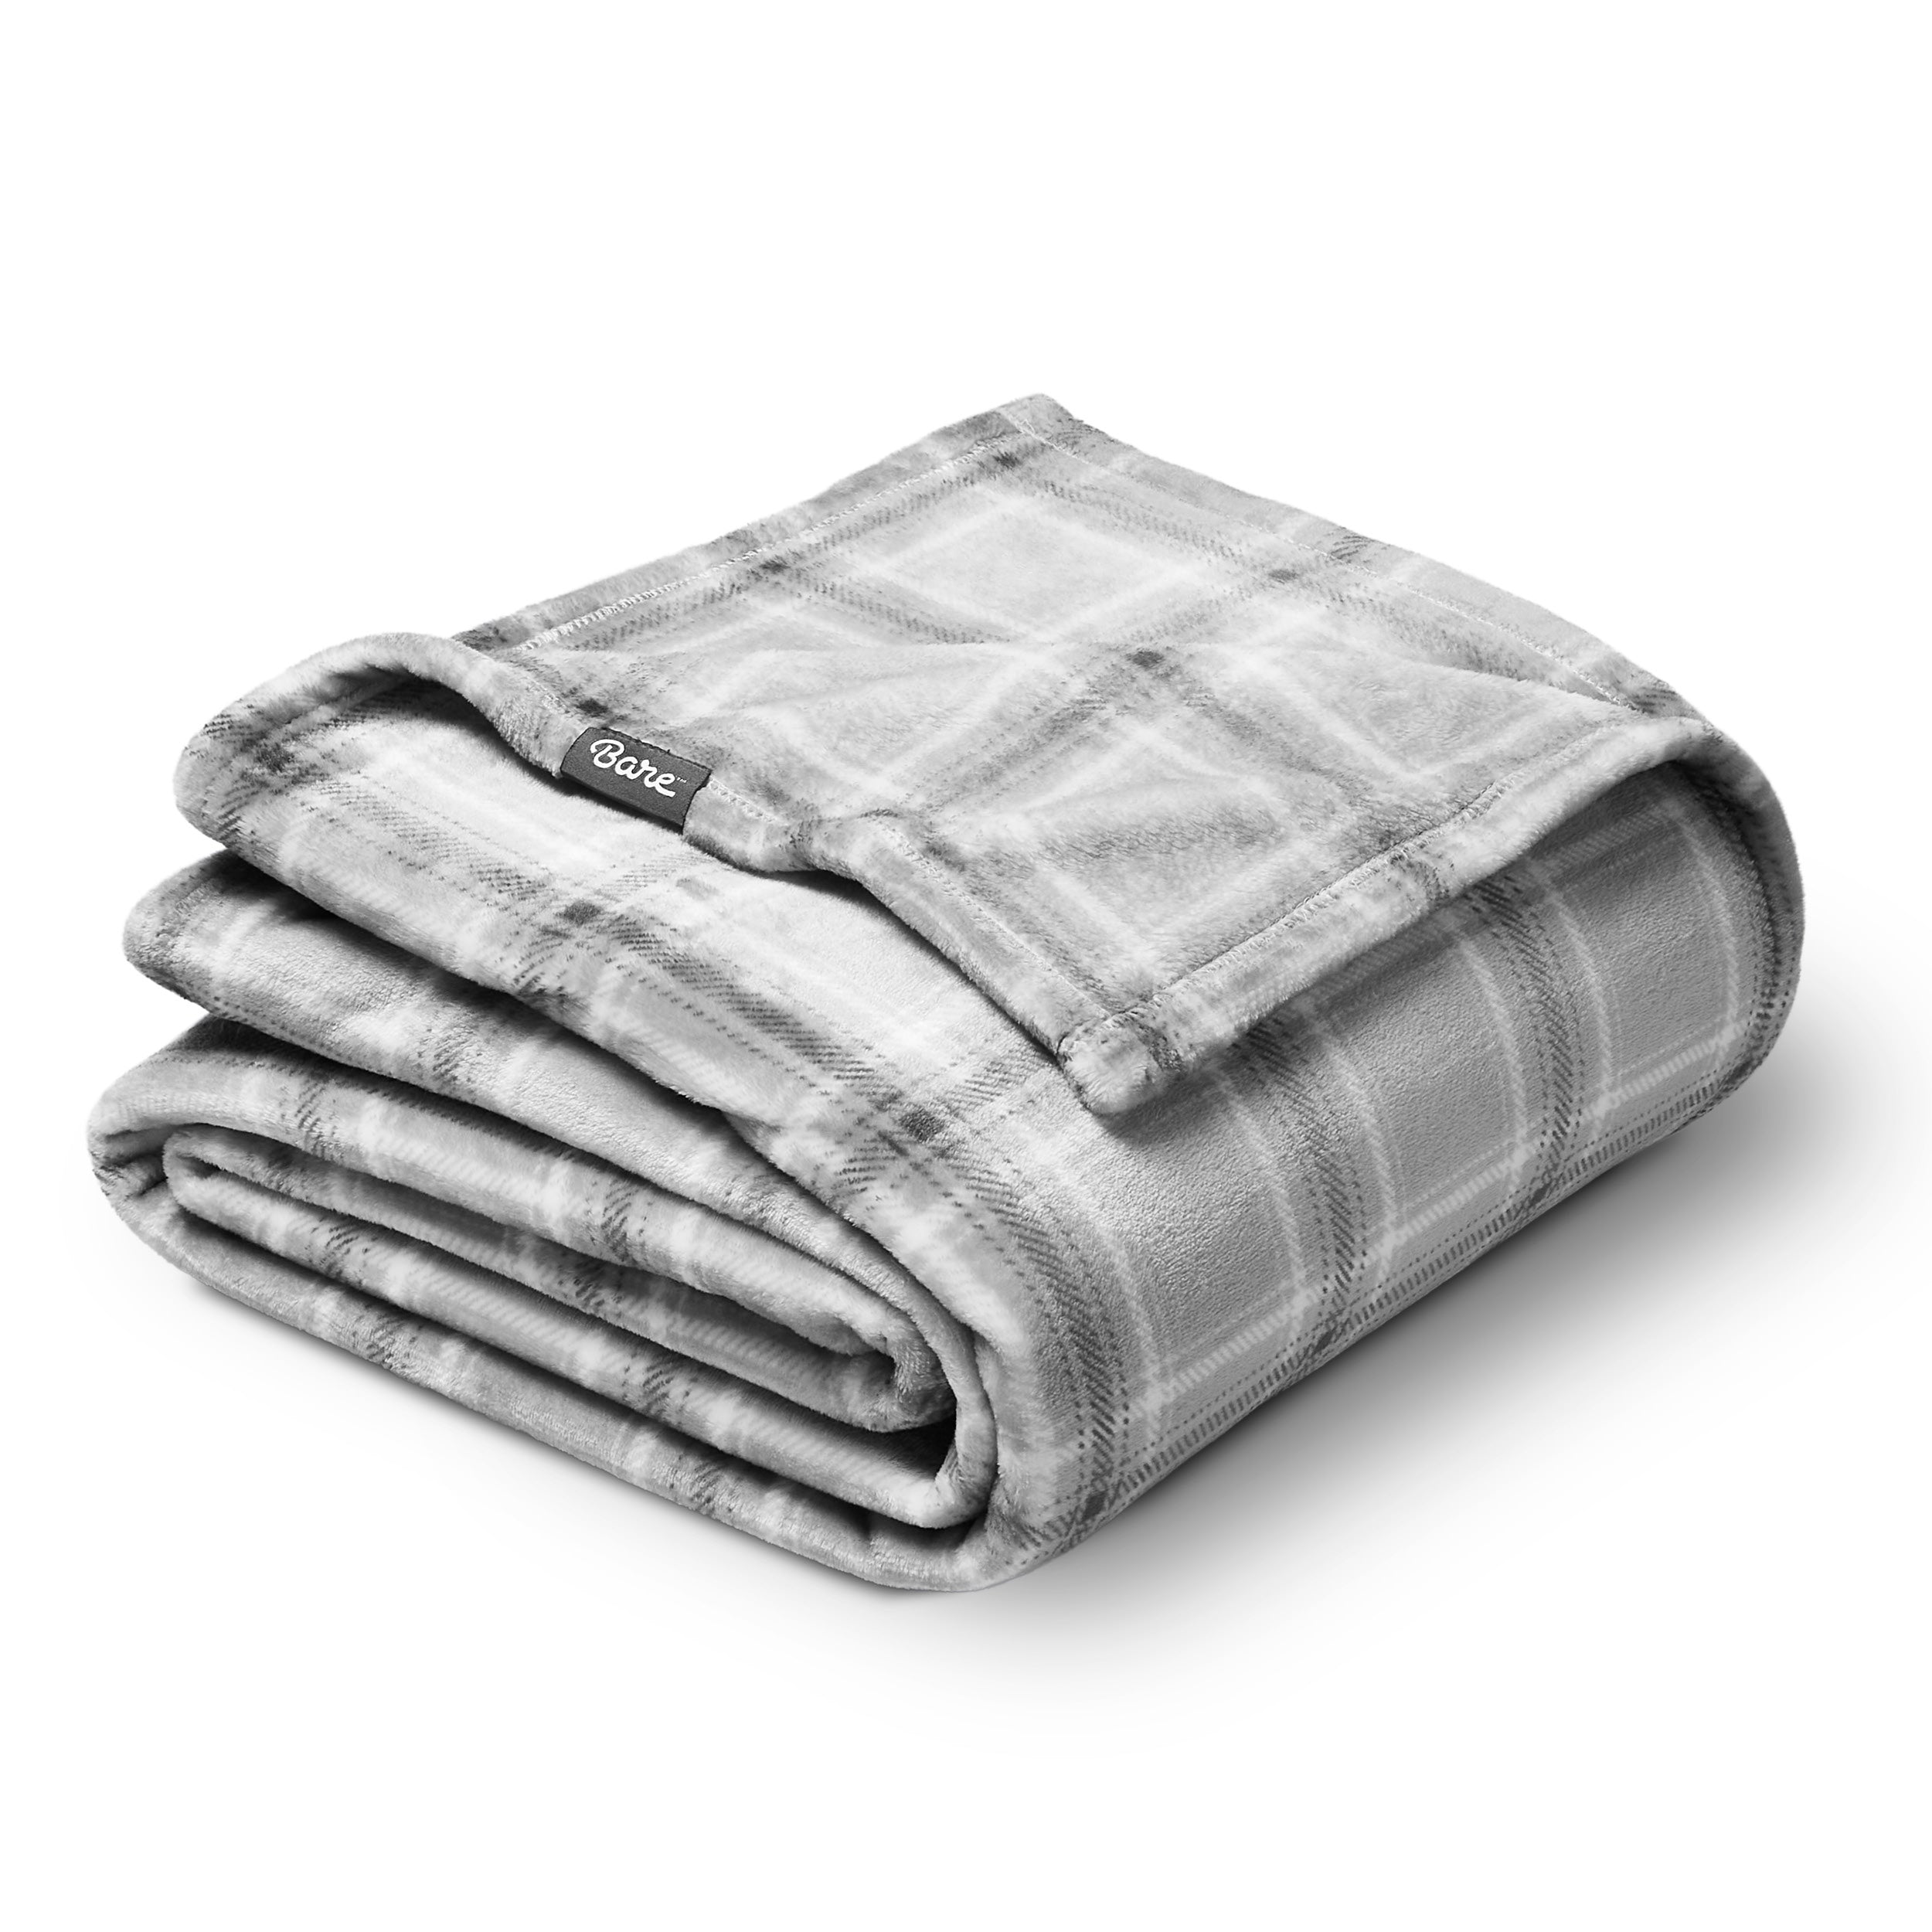 Plaid microplush blanket folded neatly